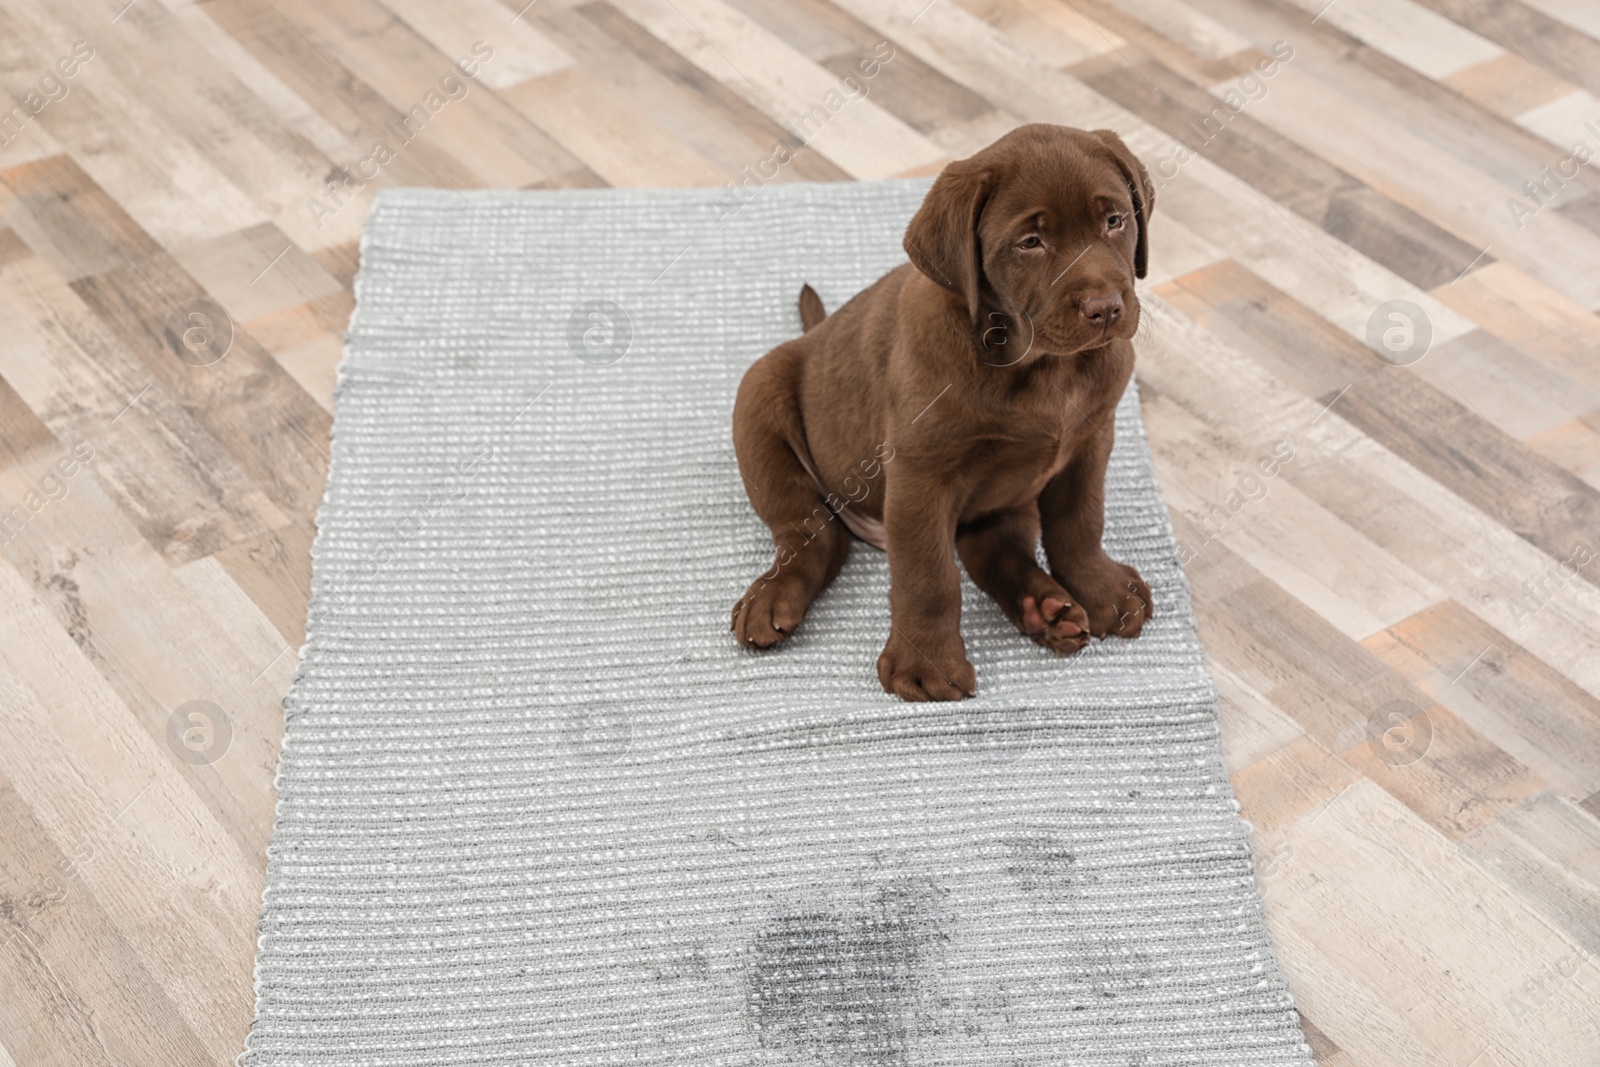 Photo of Chocolate Labrador Retriever puppy and wet spot on carpet